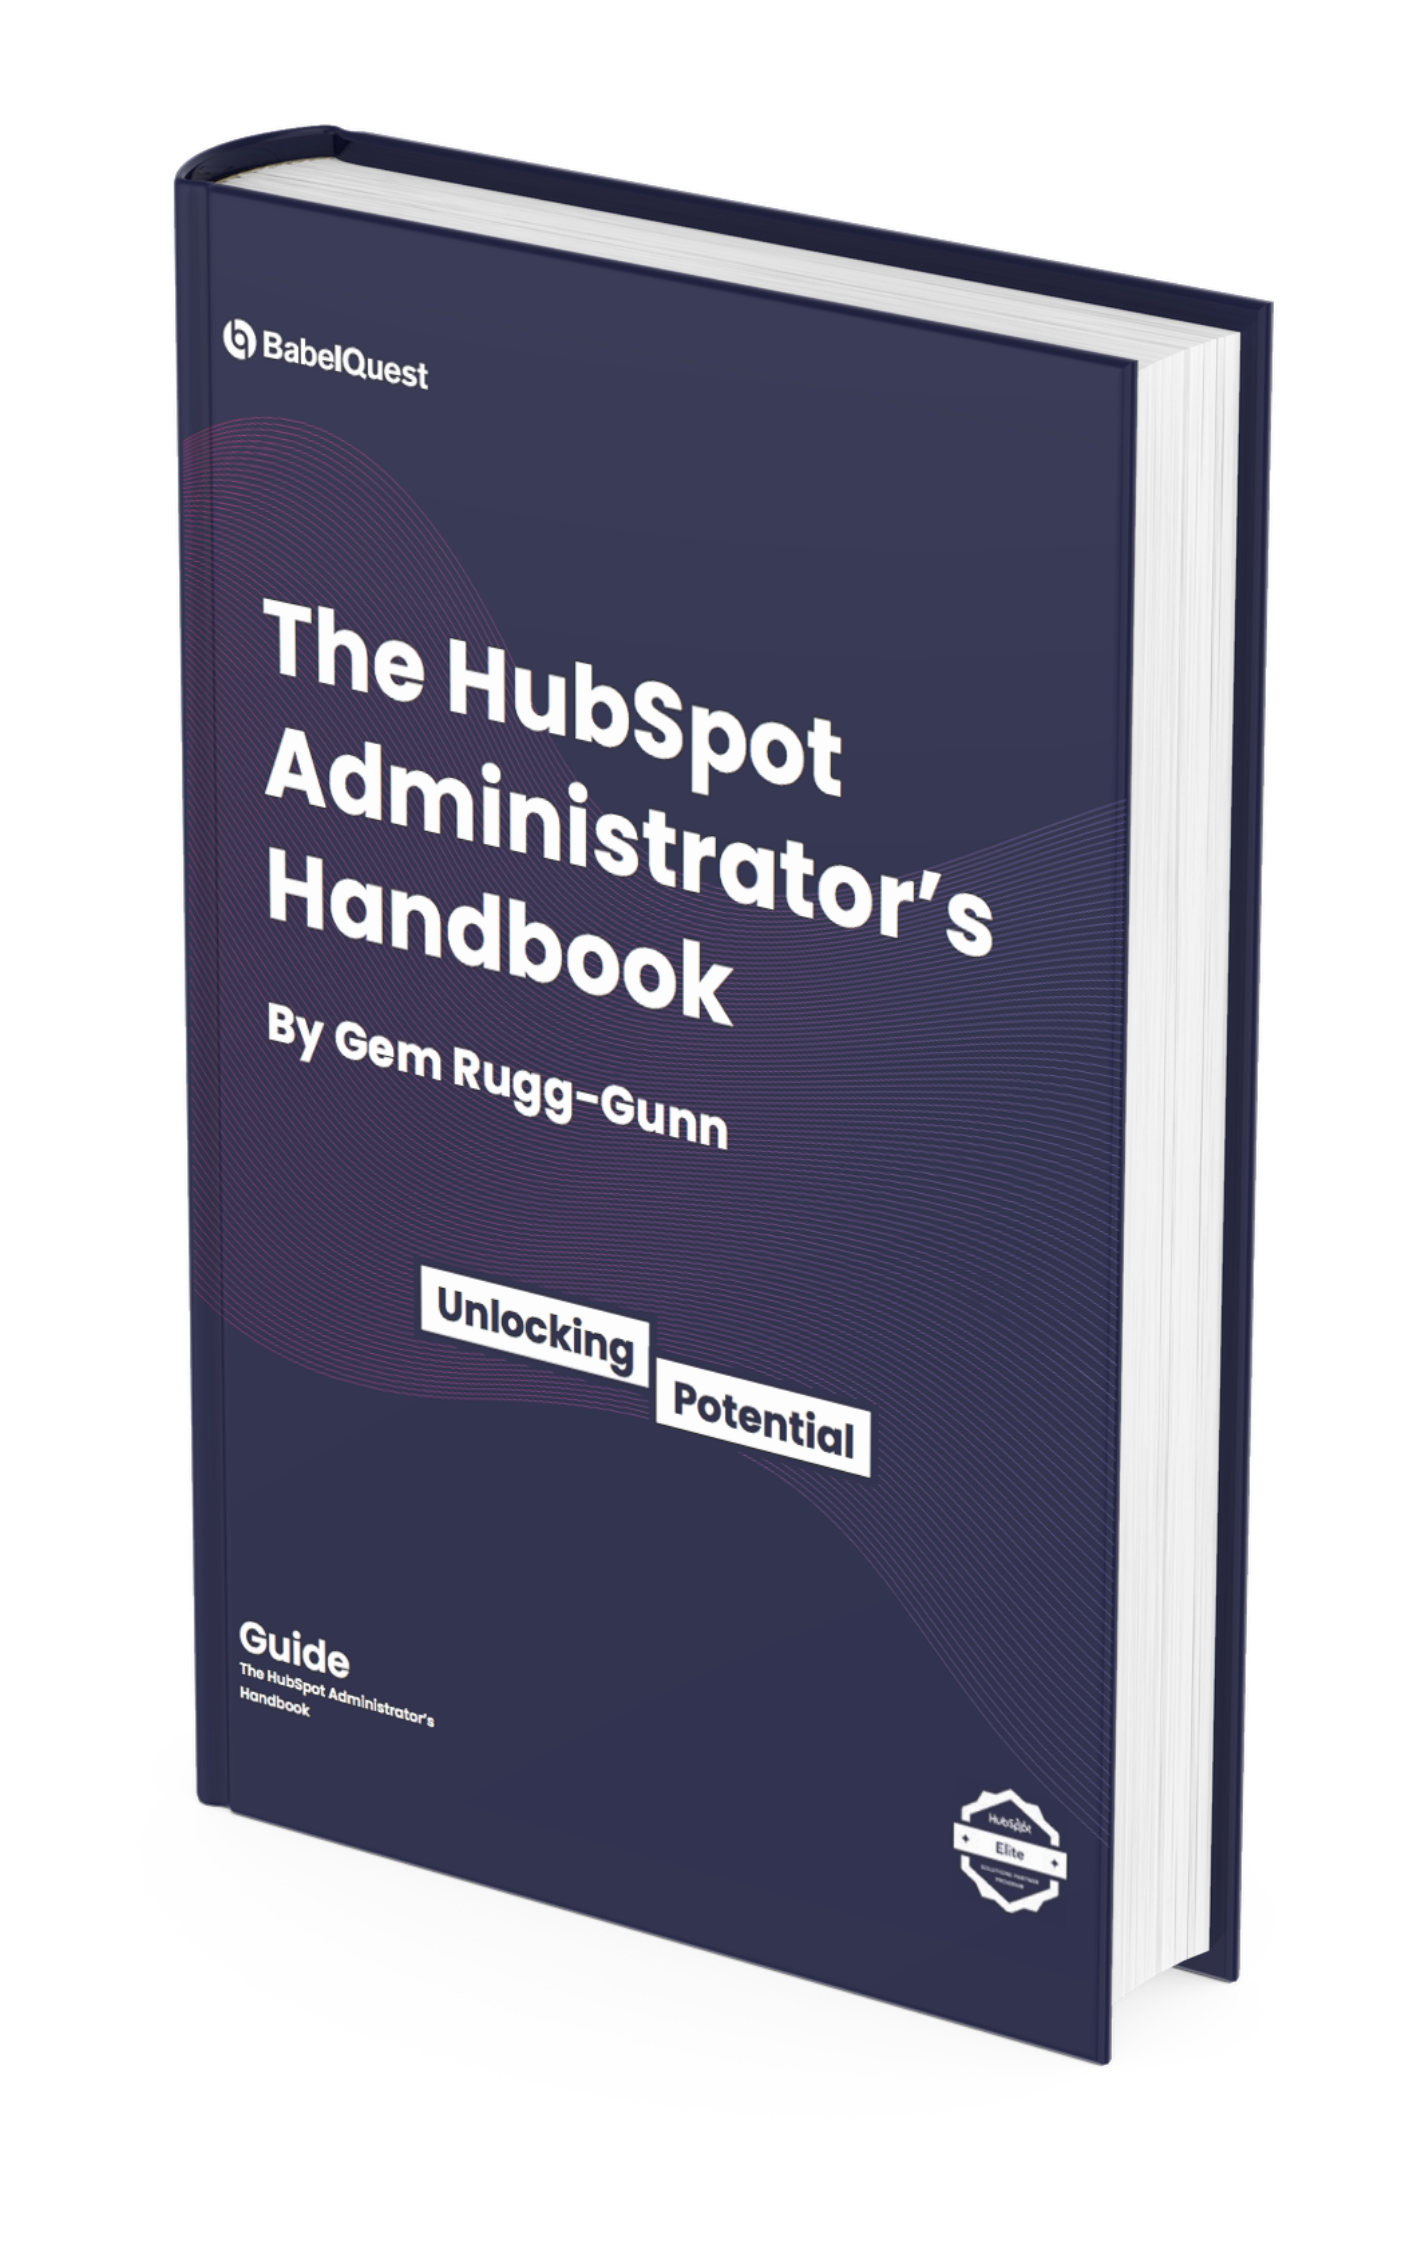 The HubSpot Administrator's Handbook